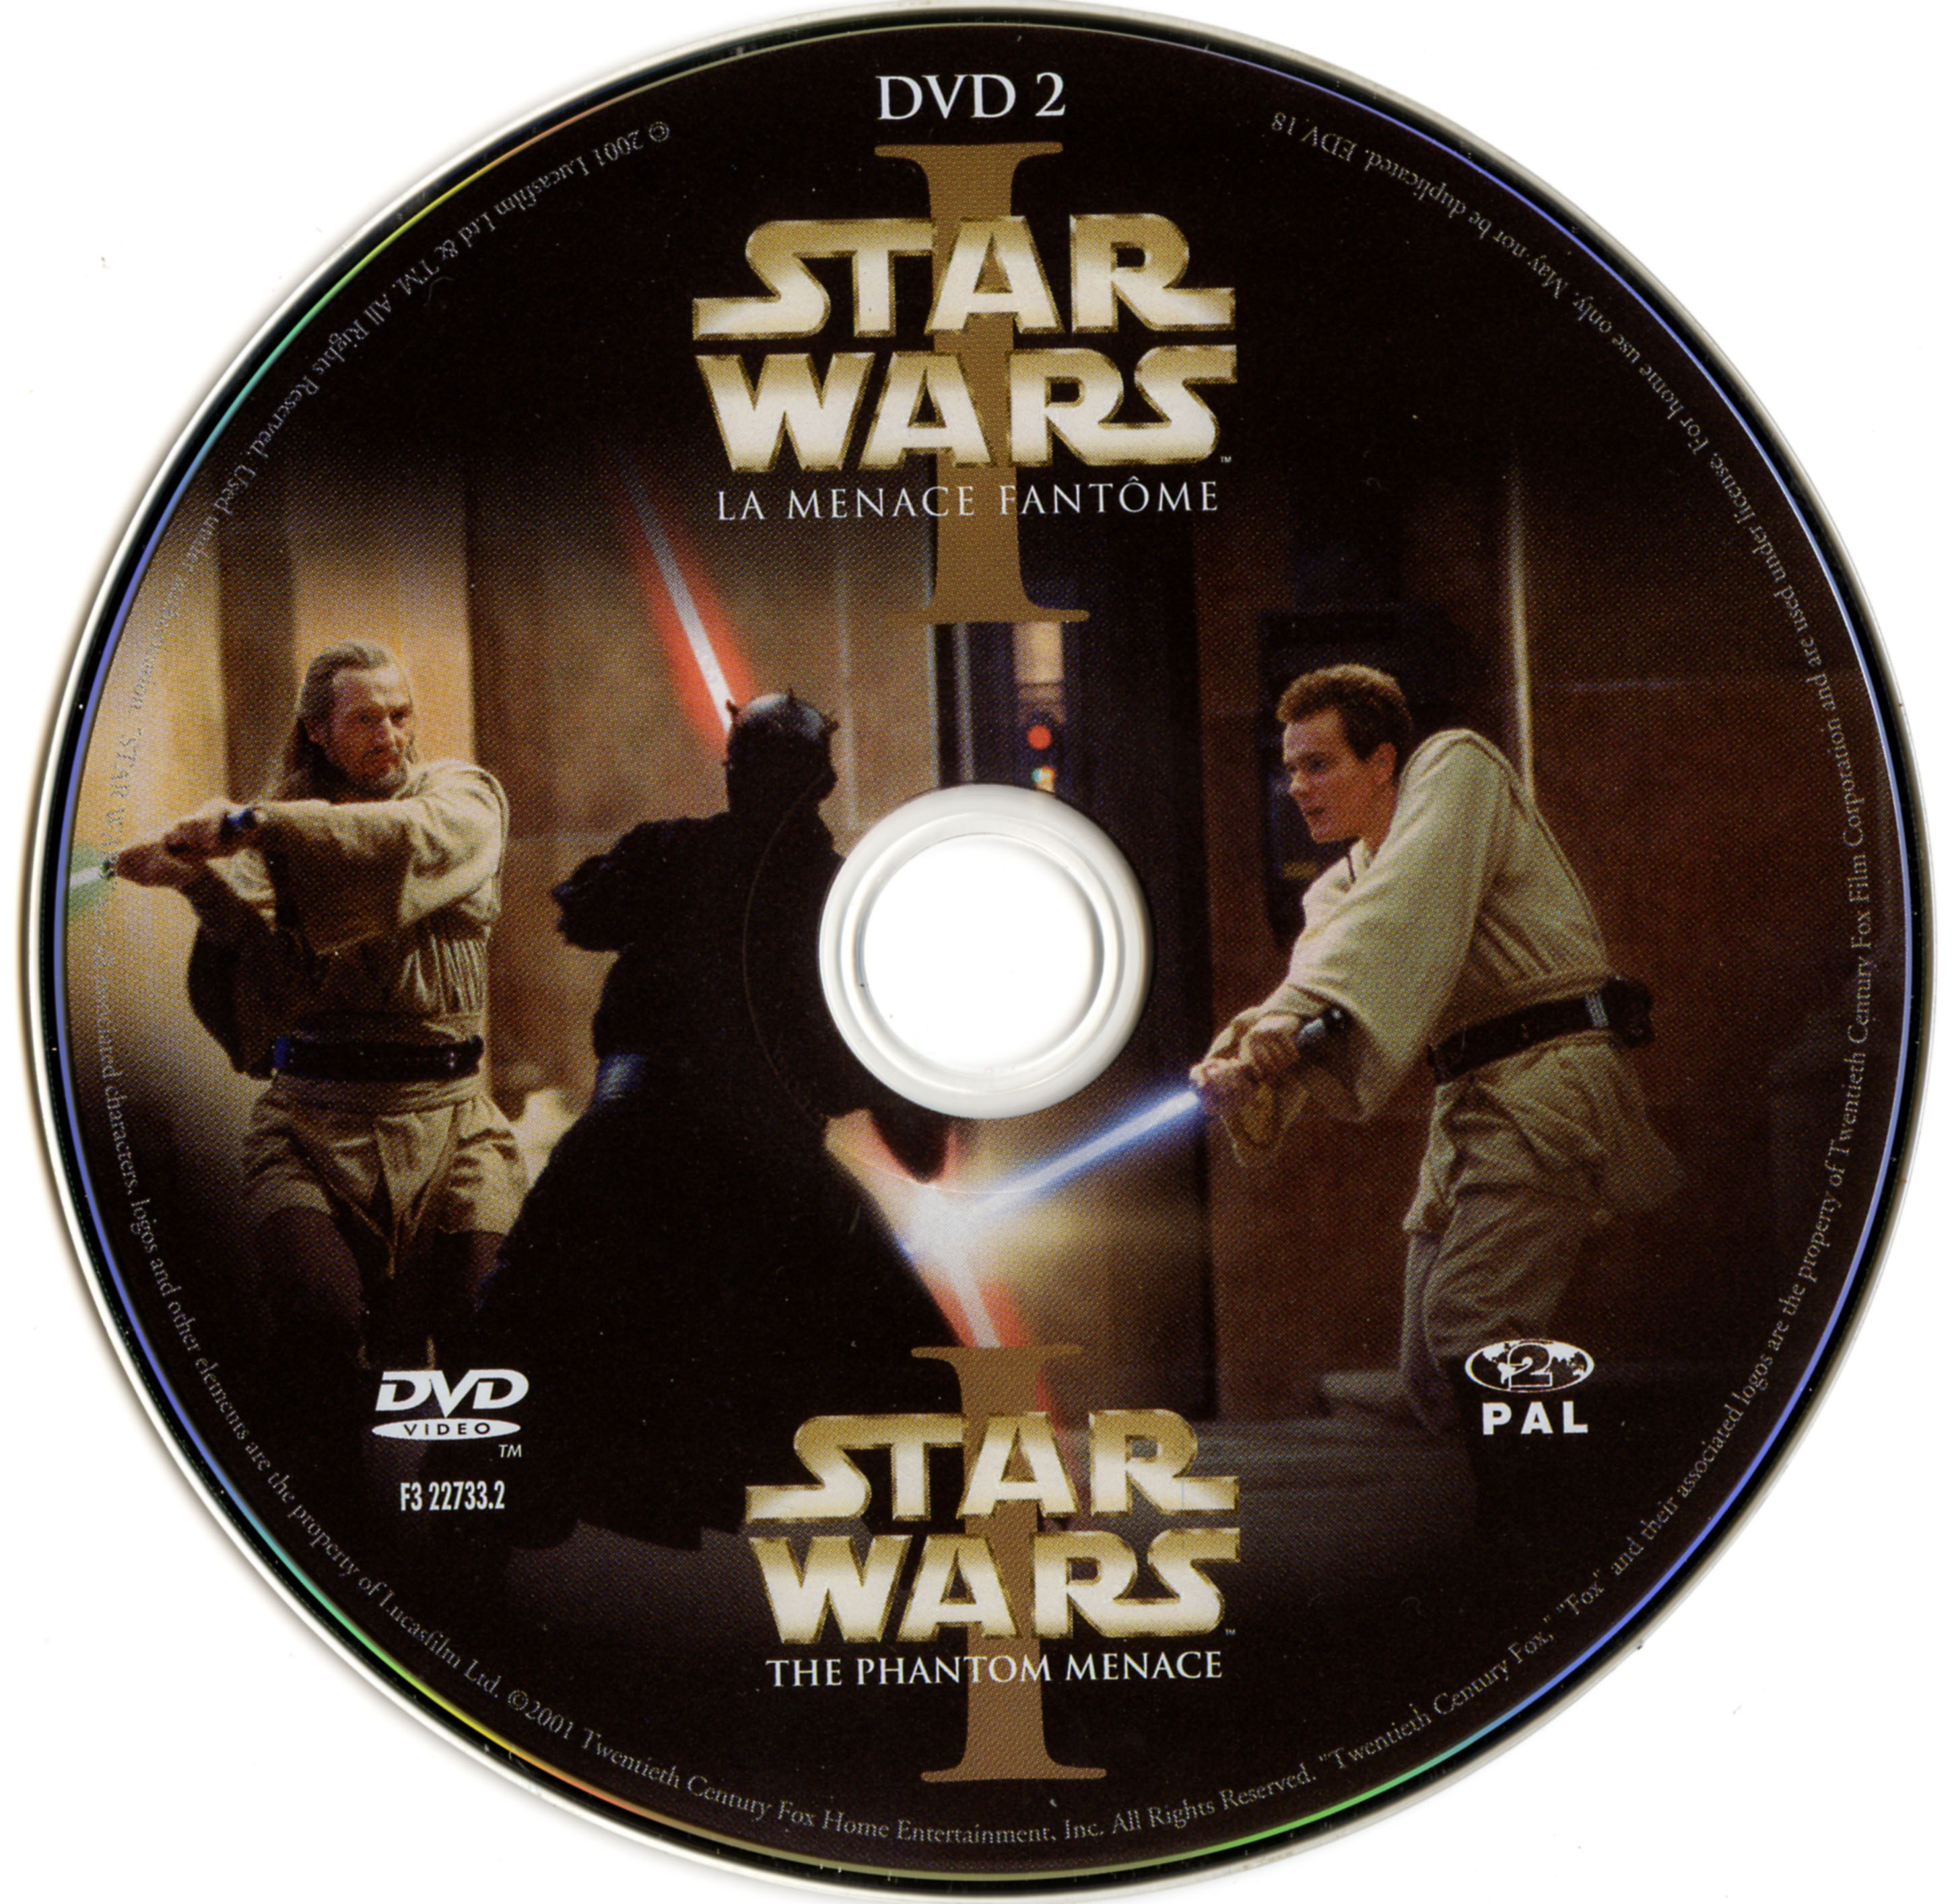 Star Wars la menace fantome DISC 2